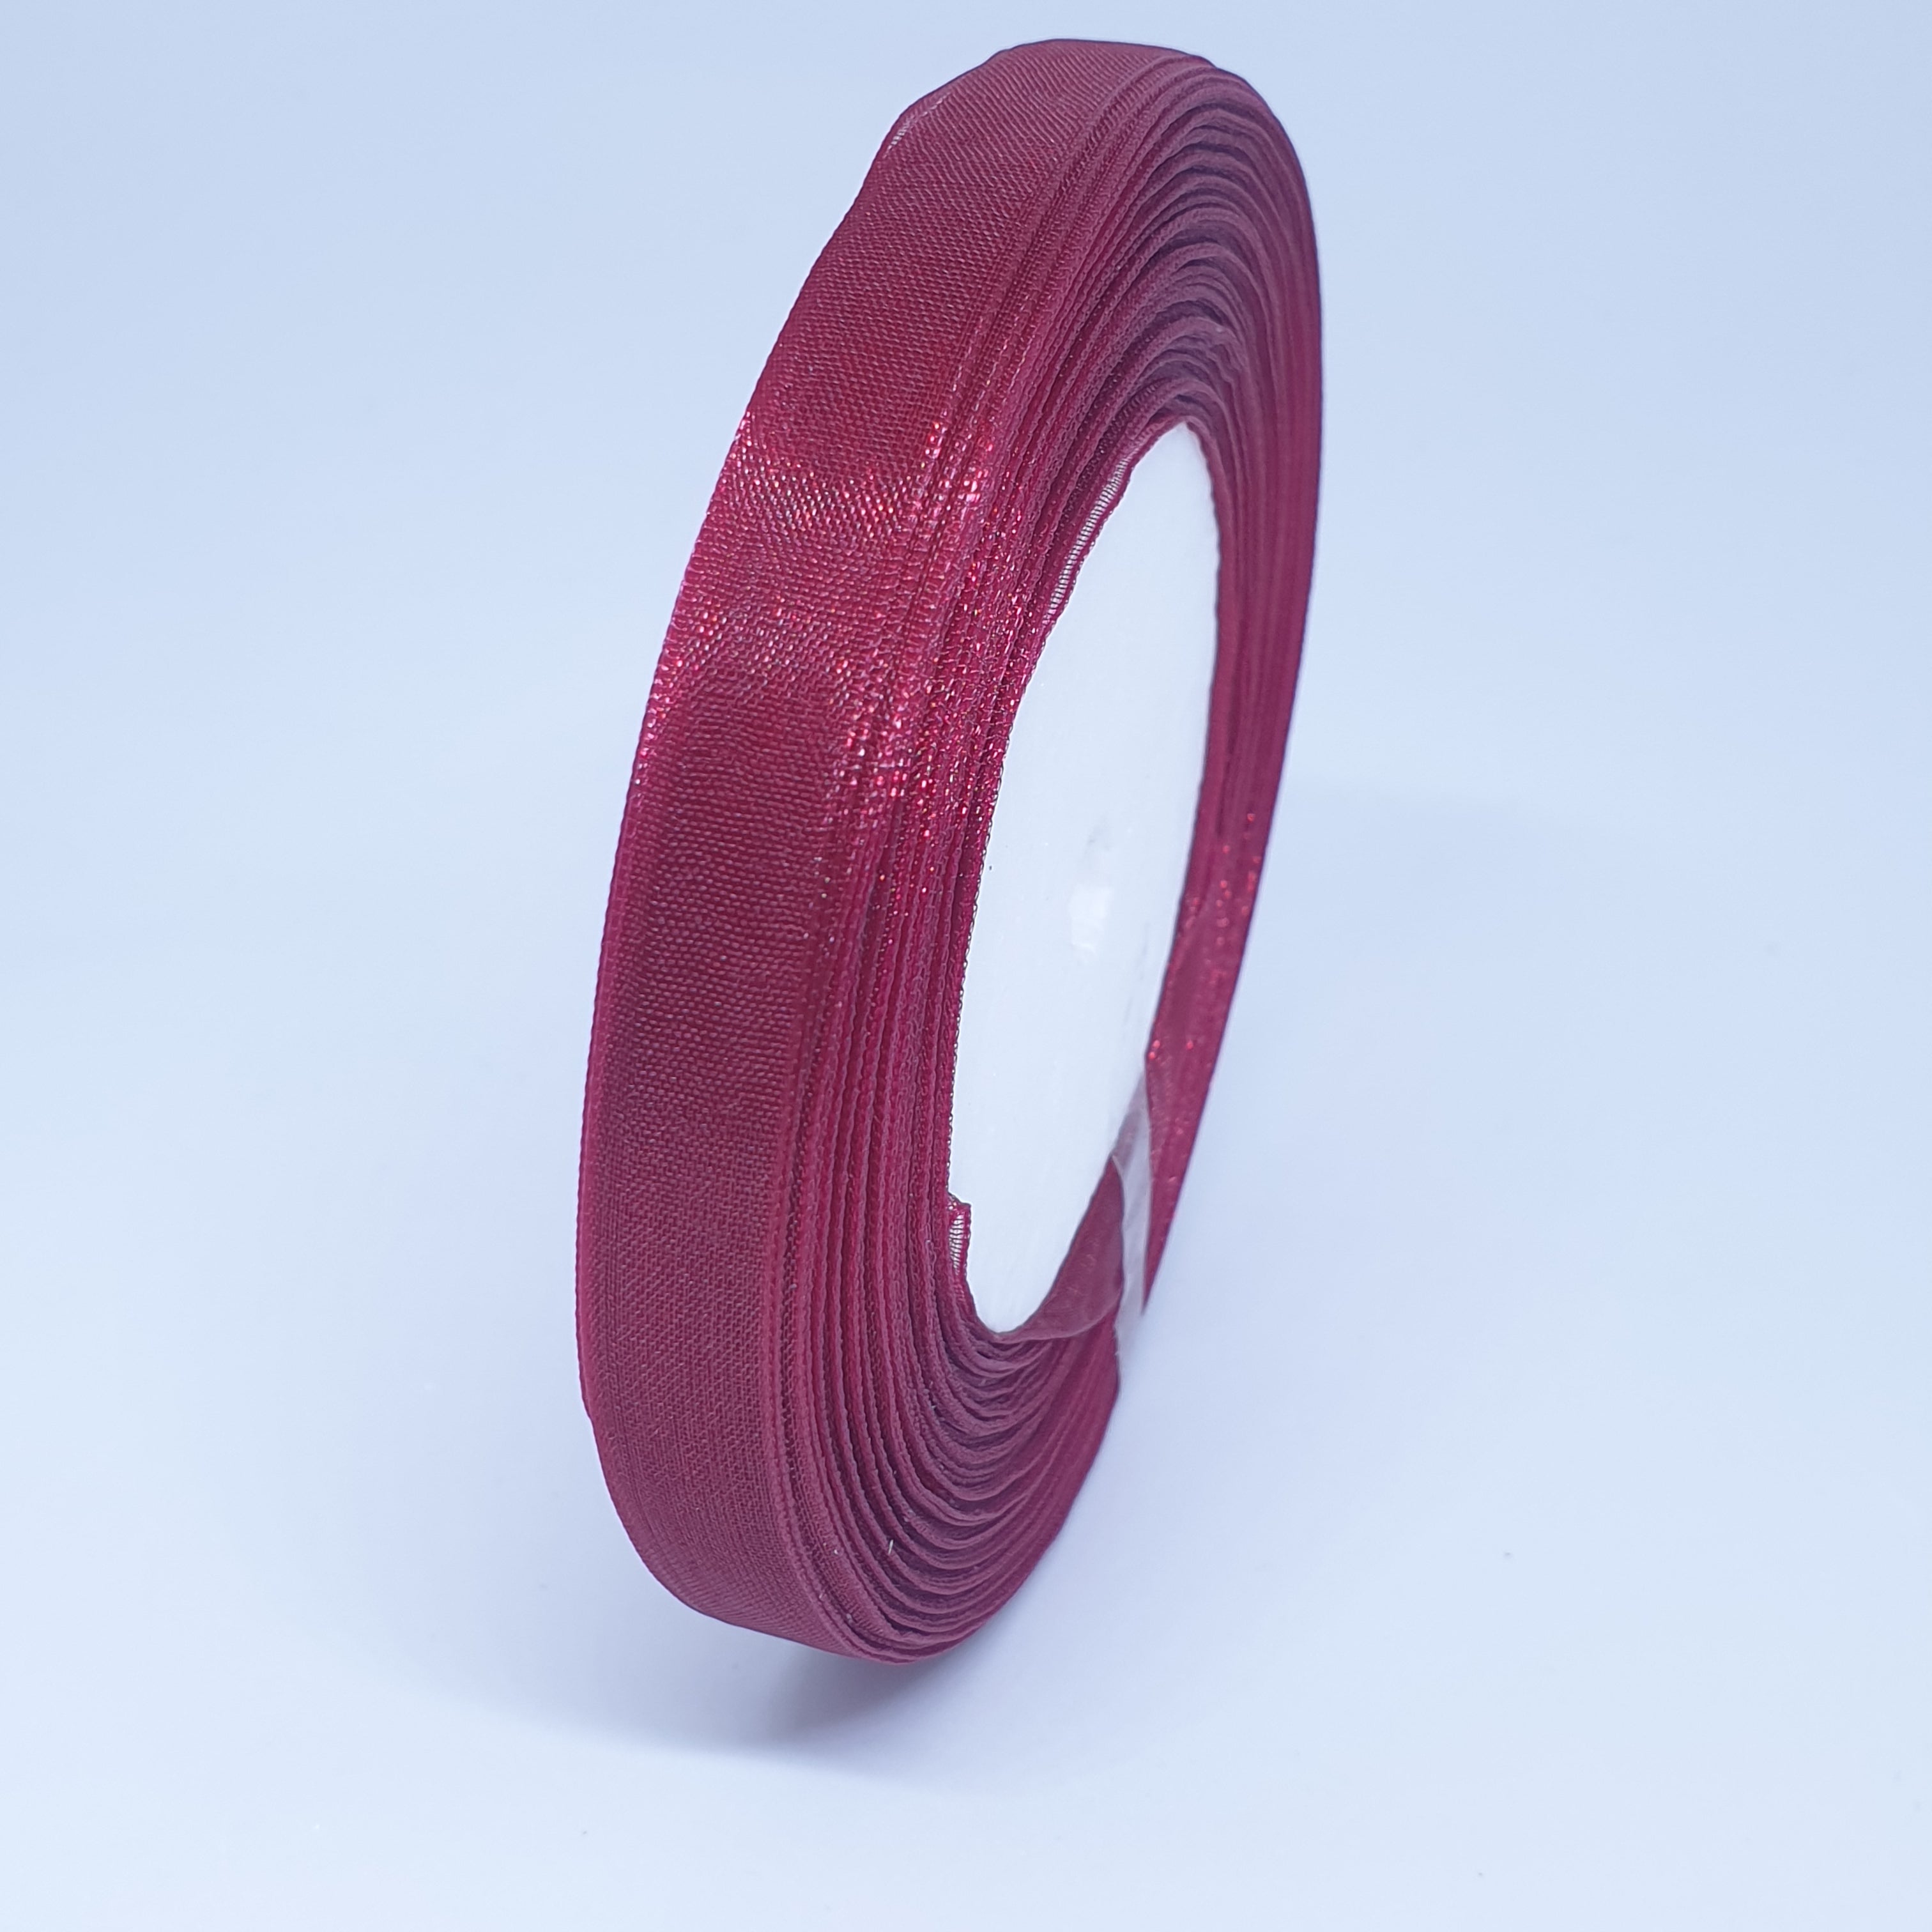 MajorCrafts 10mm 45metres Wine Red Sheer Organza Fabric Ribbon Roll R48